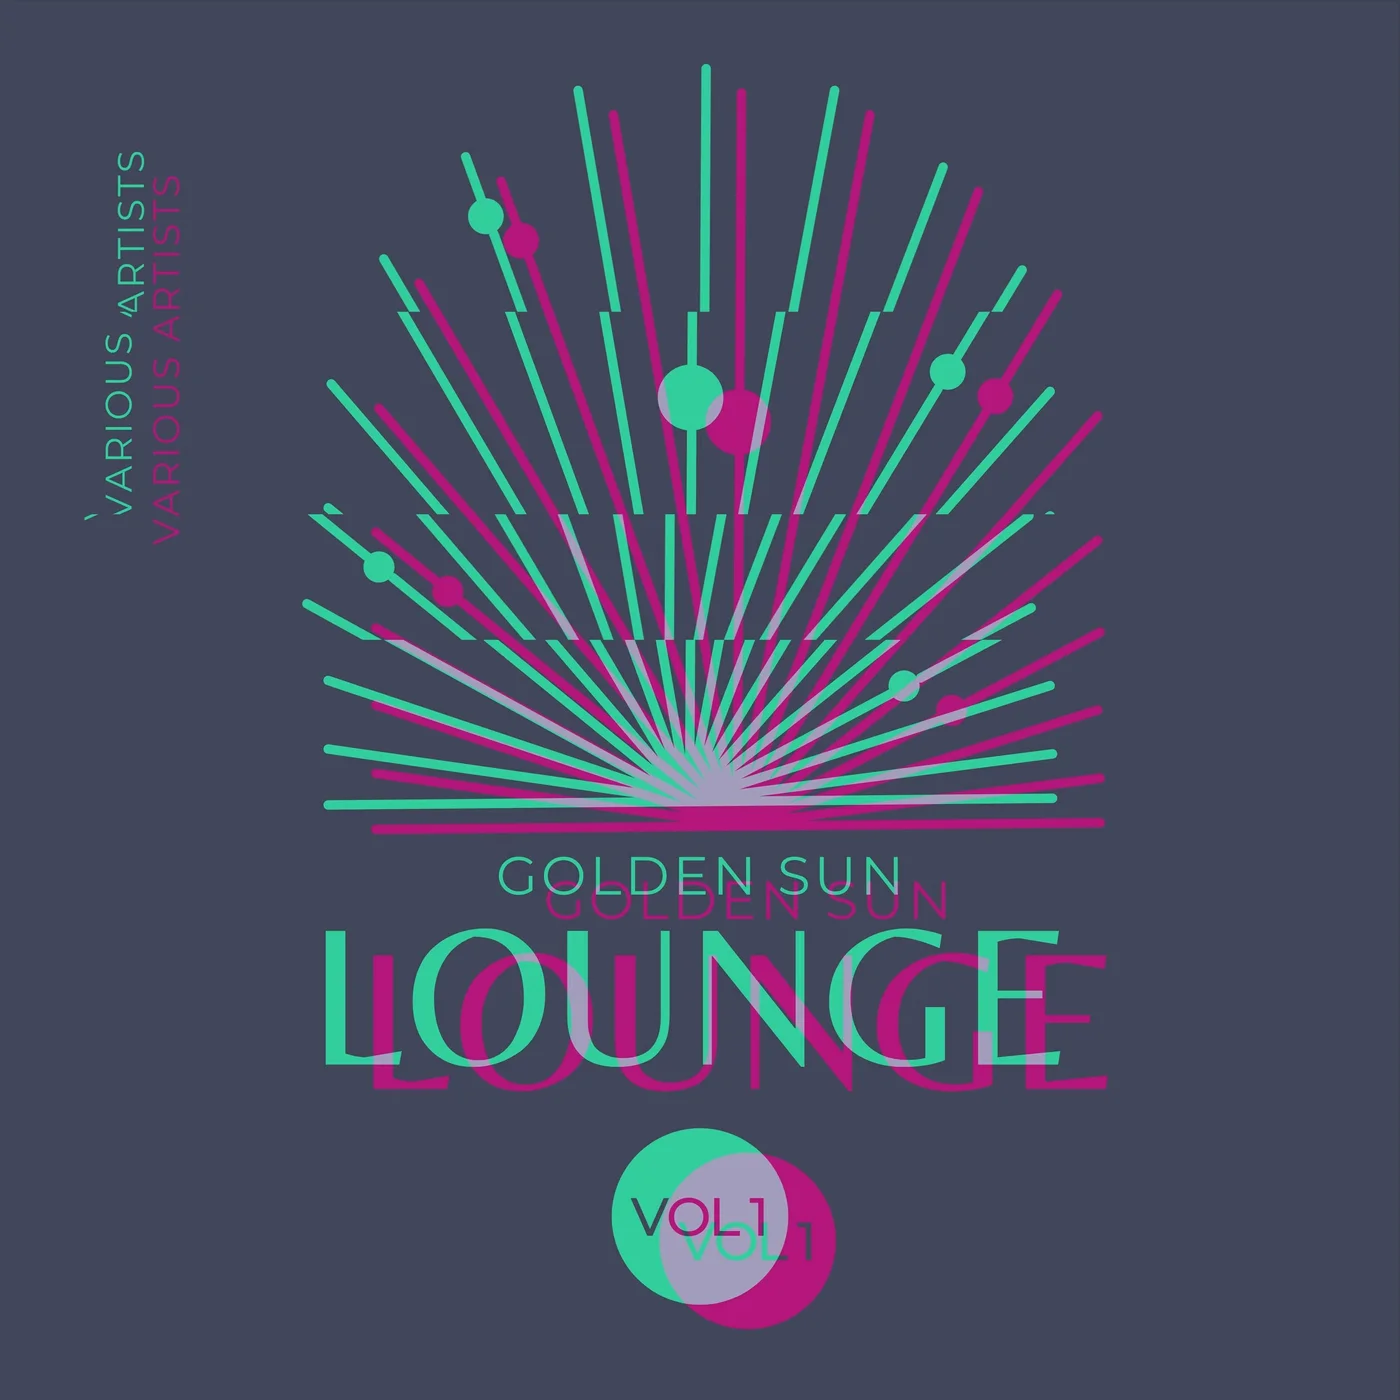 Cover von Compilation "Golden Sun Lounge, Vol. 1>"